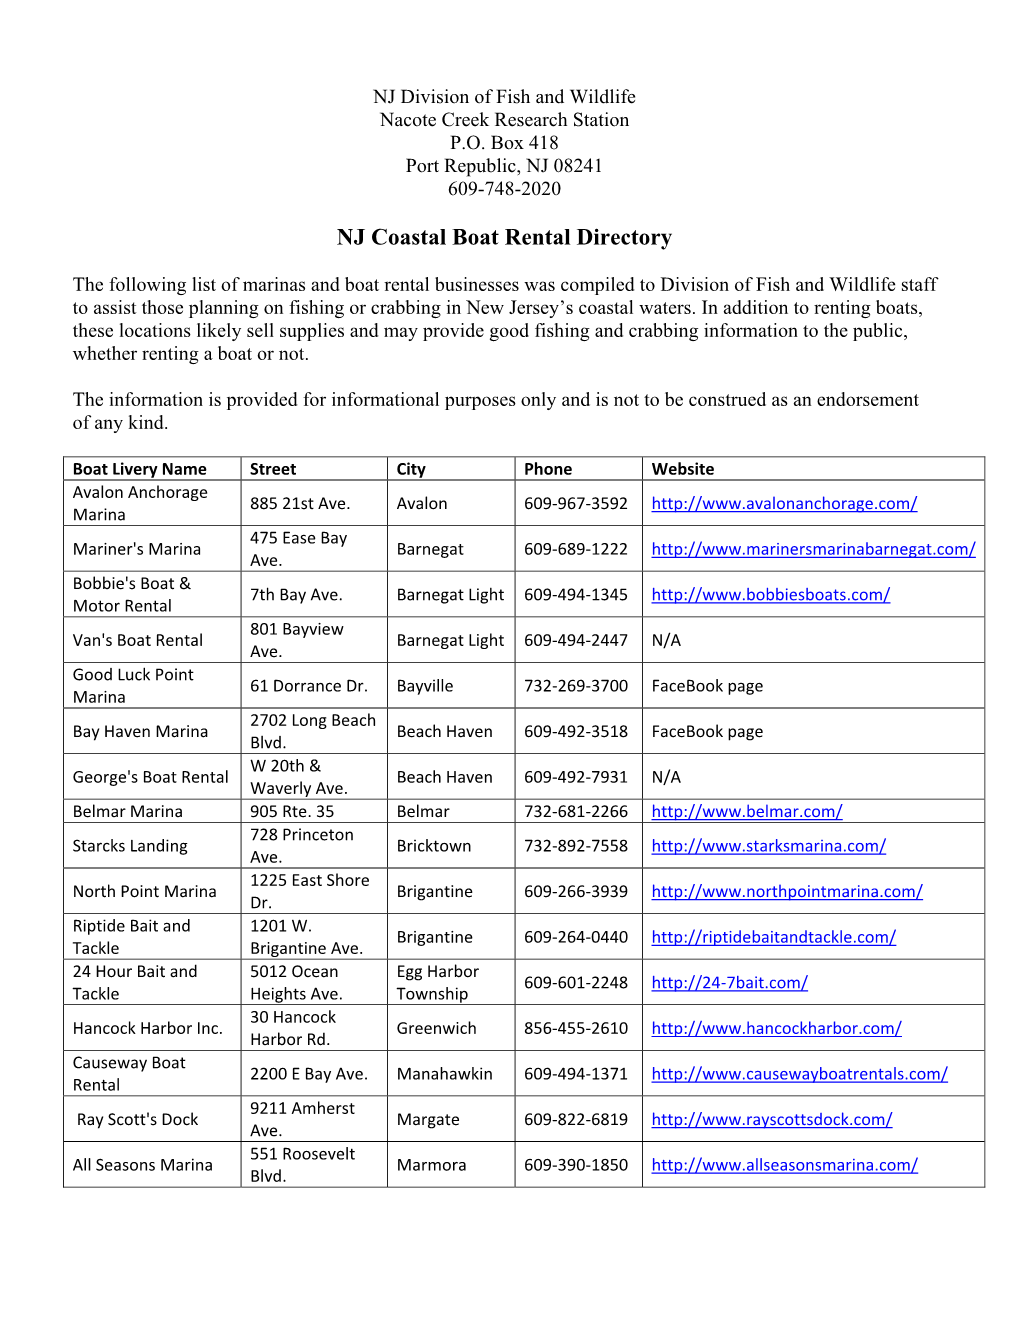 NJ Coastal Boat Rental Directory